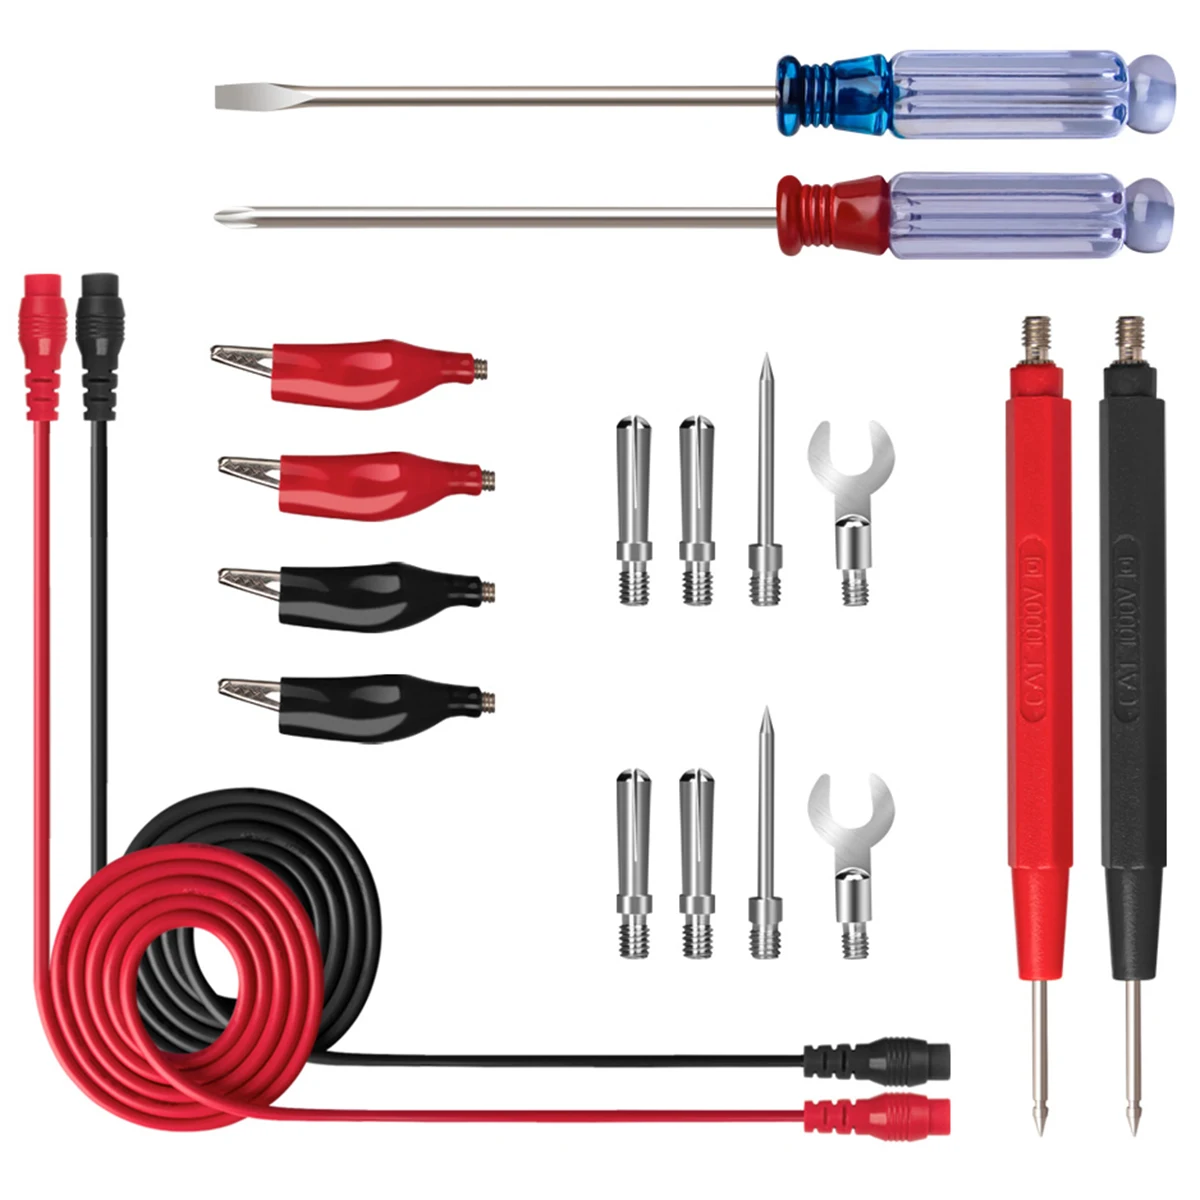 18-in-1 Multi-Function Test Lead Kit for Digital Multimeter Wires Clips U-type Fork Needle Tips Screwdrivers | Инструменты